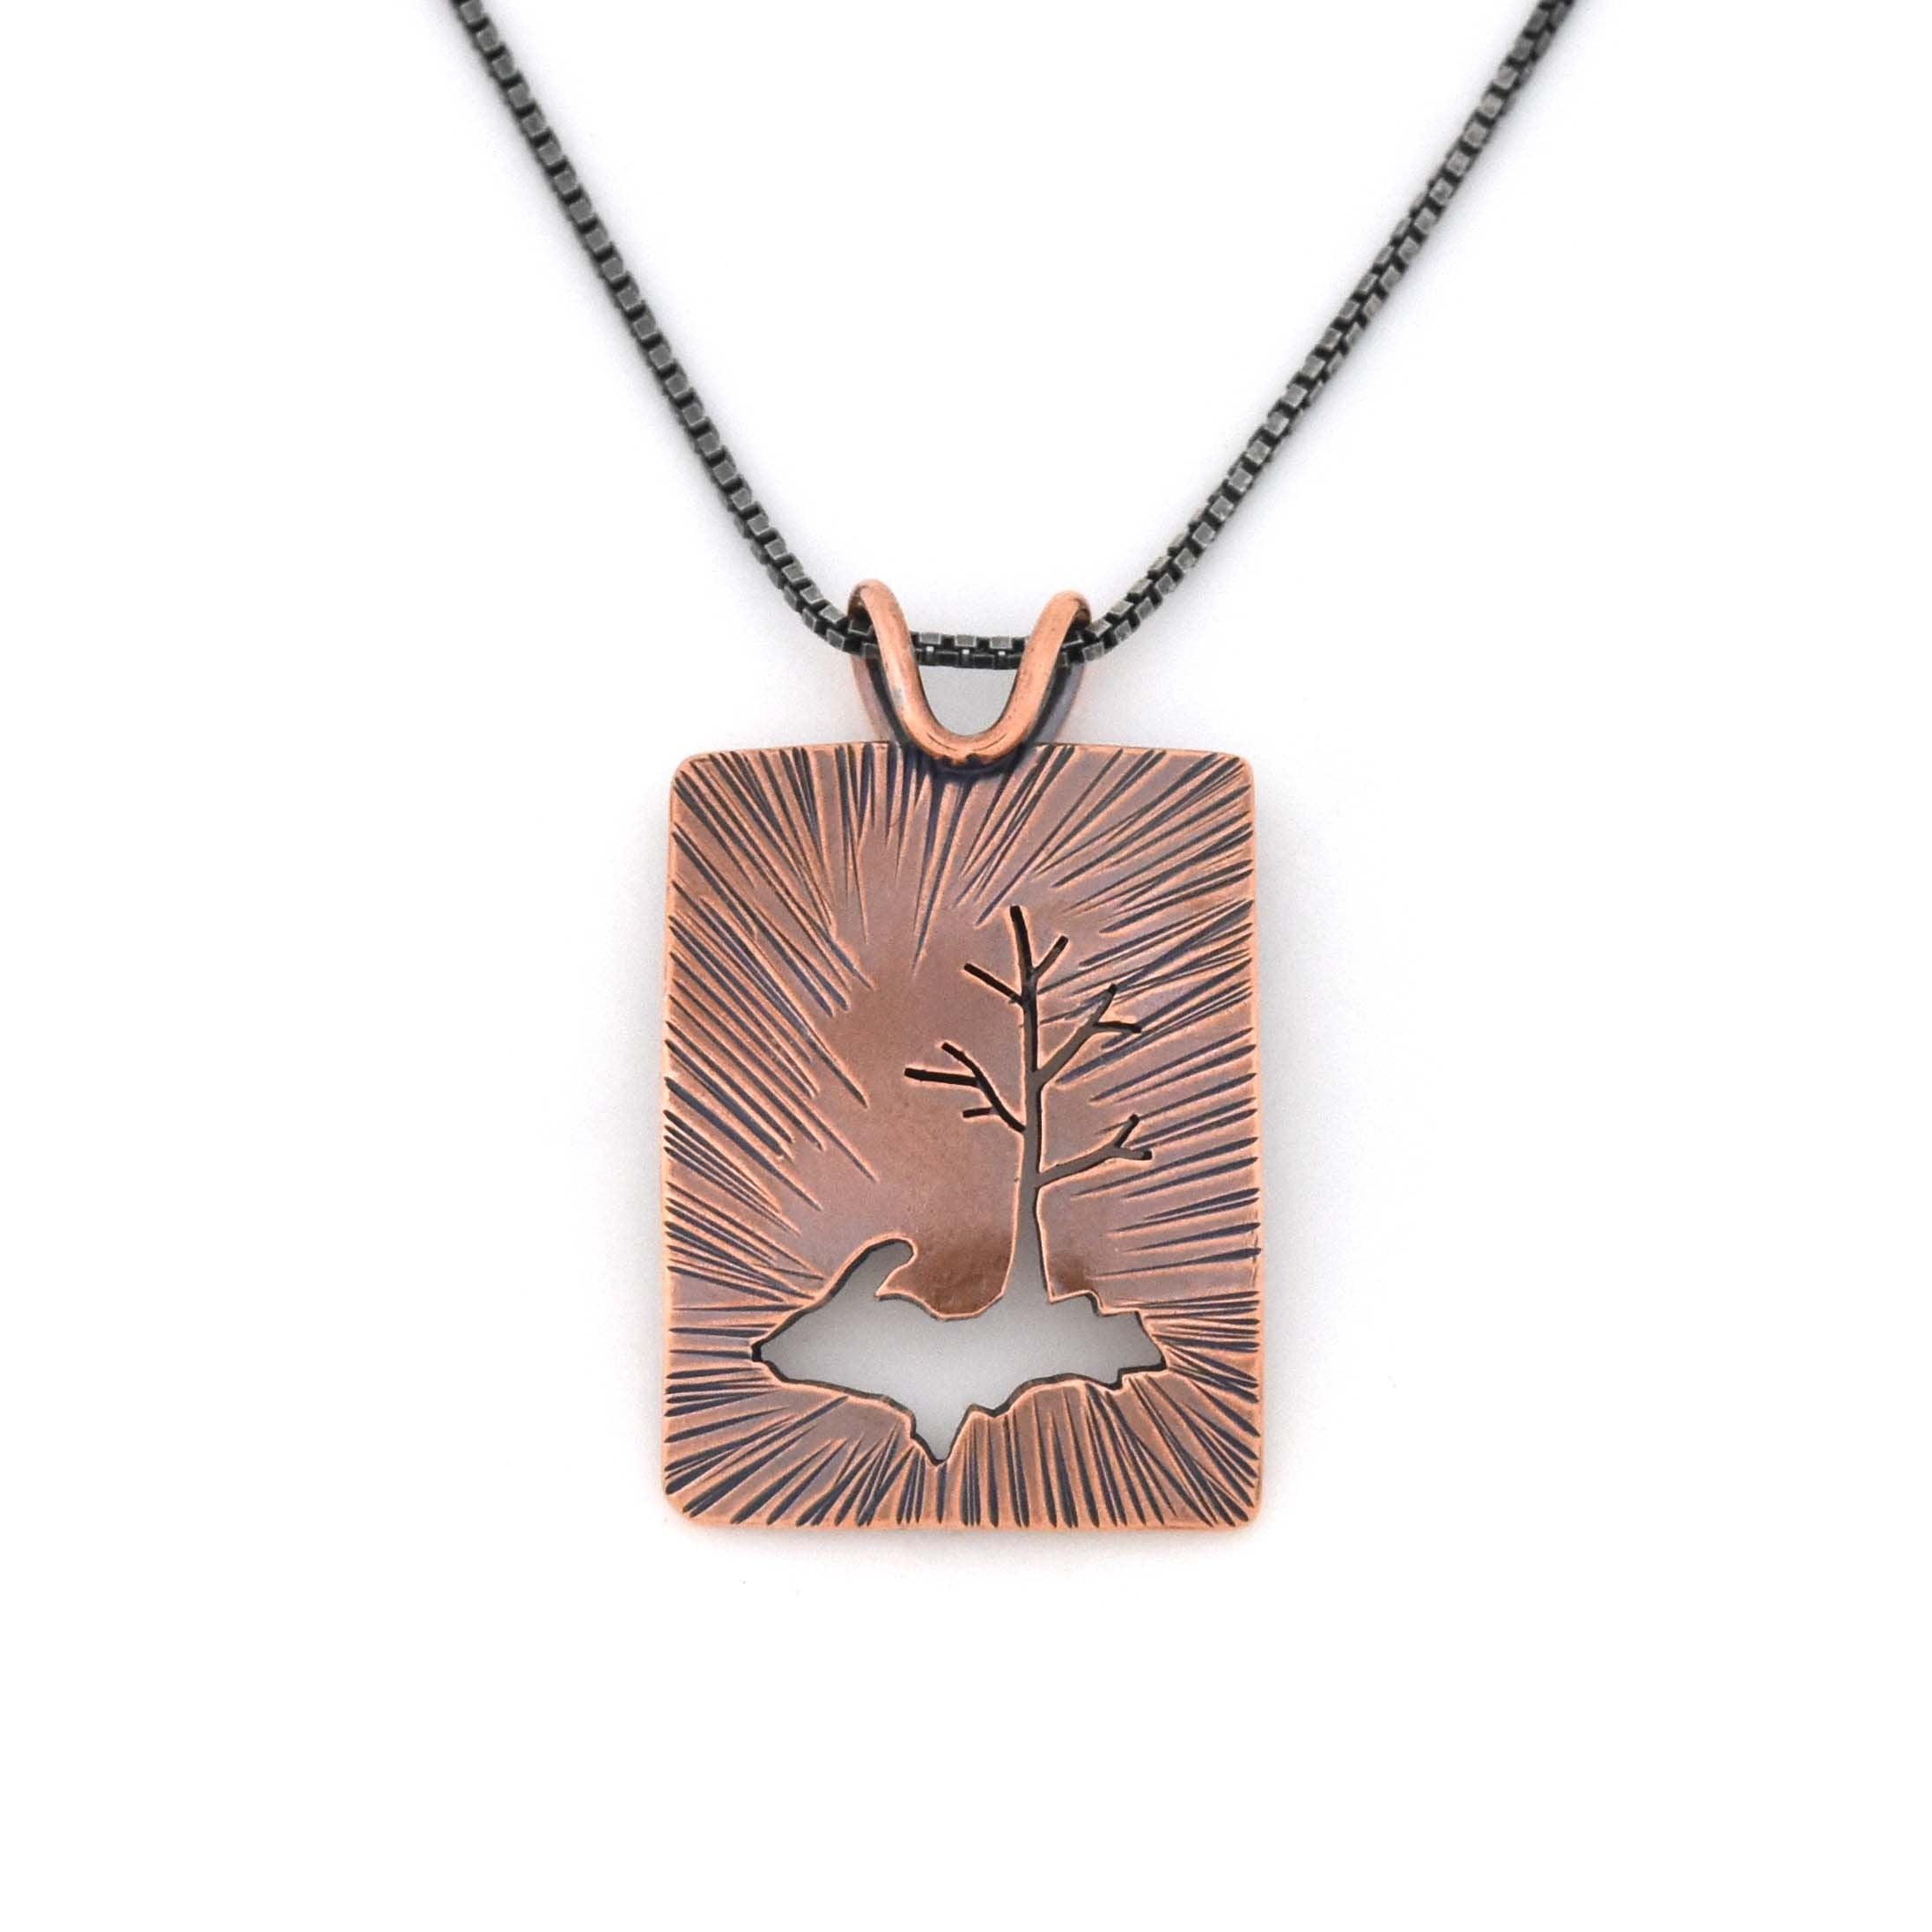 Radial Upper Peninsula Family Tree Copper Pendant - Copper Pendant   3227 - handmade by Beth Millner Jewelry